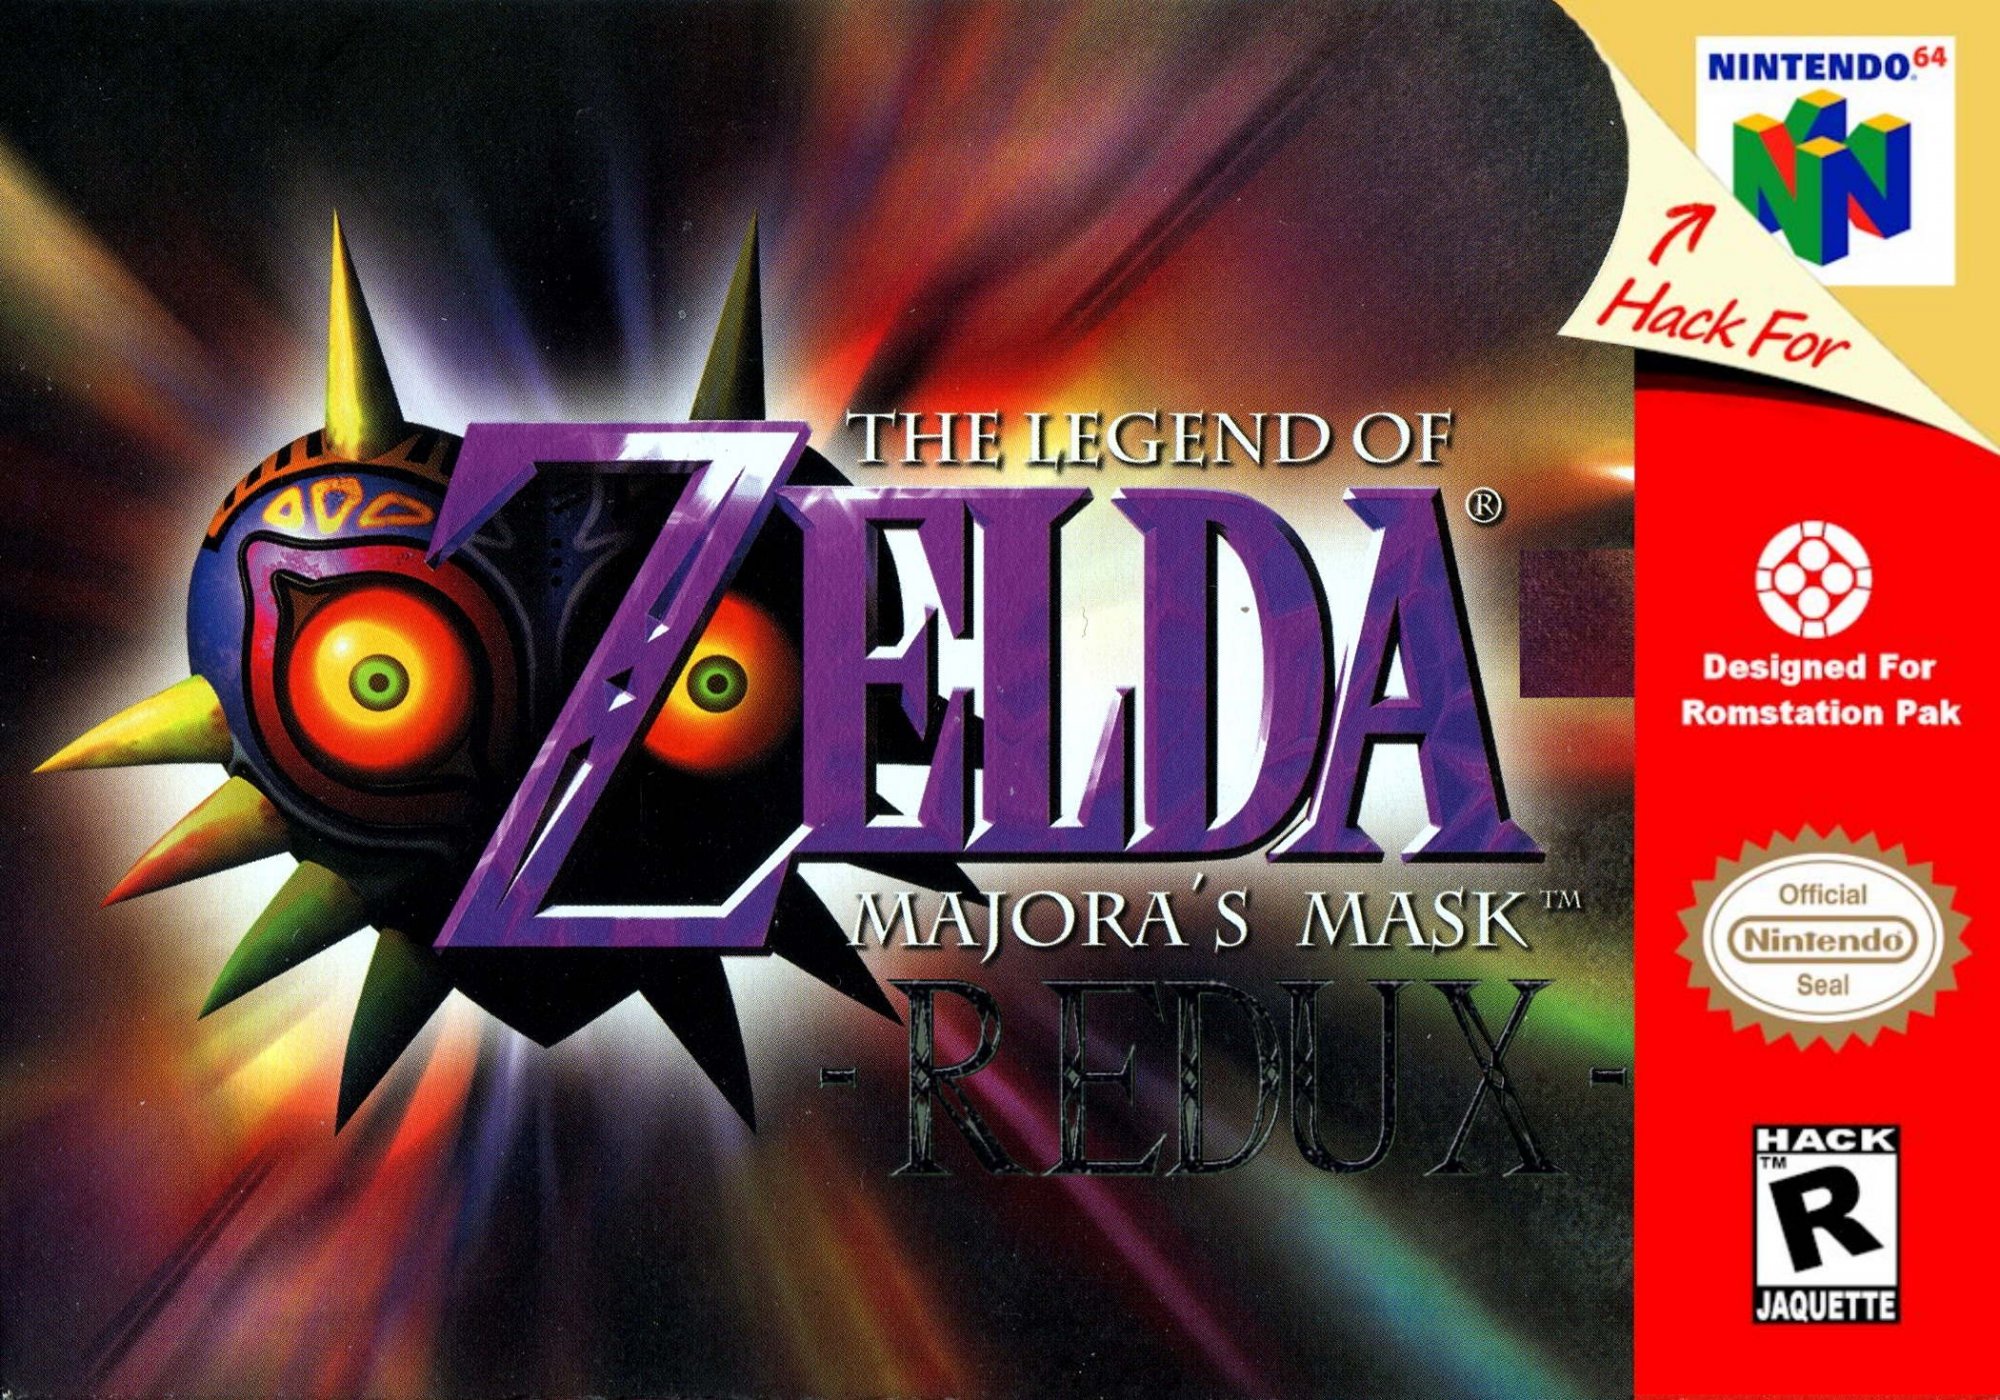 The Legend of Zelda: Majora's Mask Redux